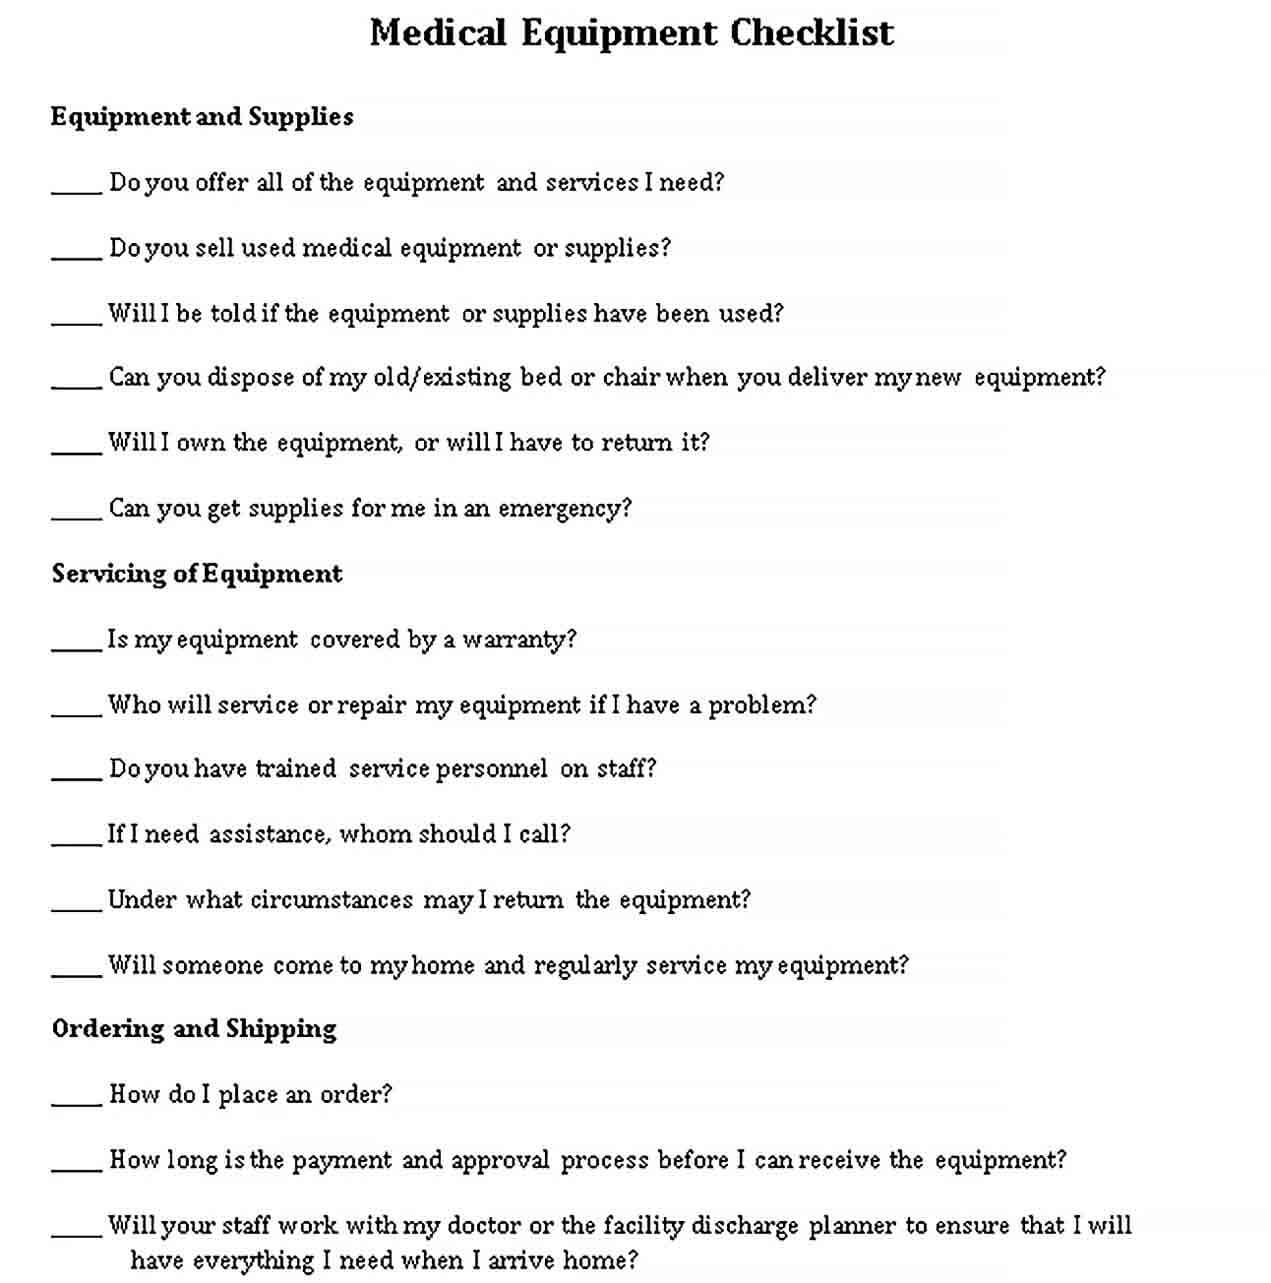 Sample Medical Equipment Checklist Template